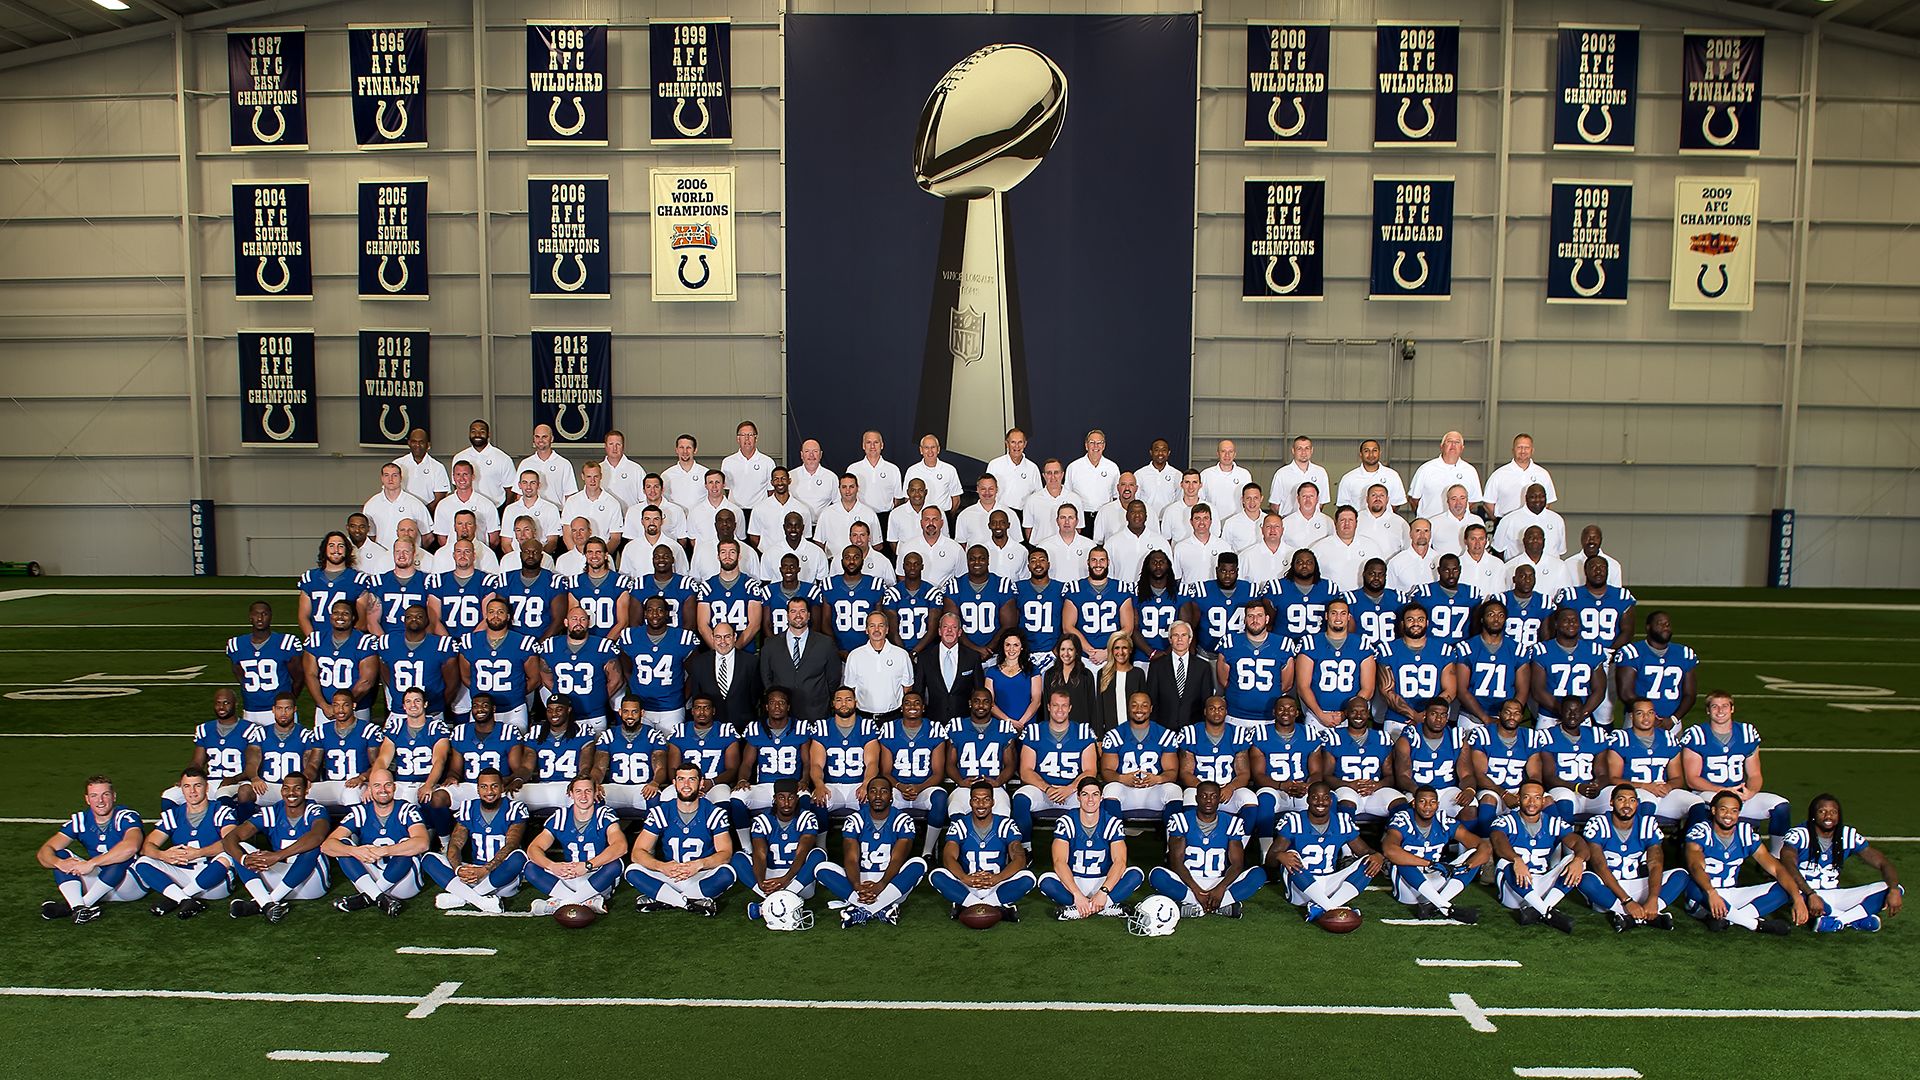 Colts Team Photos | Indianapolis Colts - colts.com